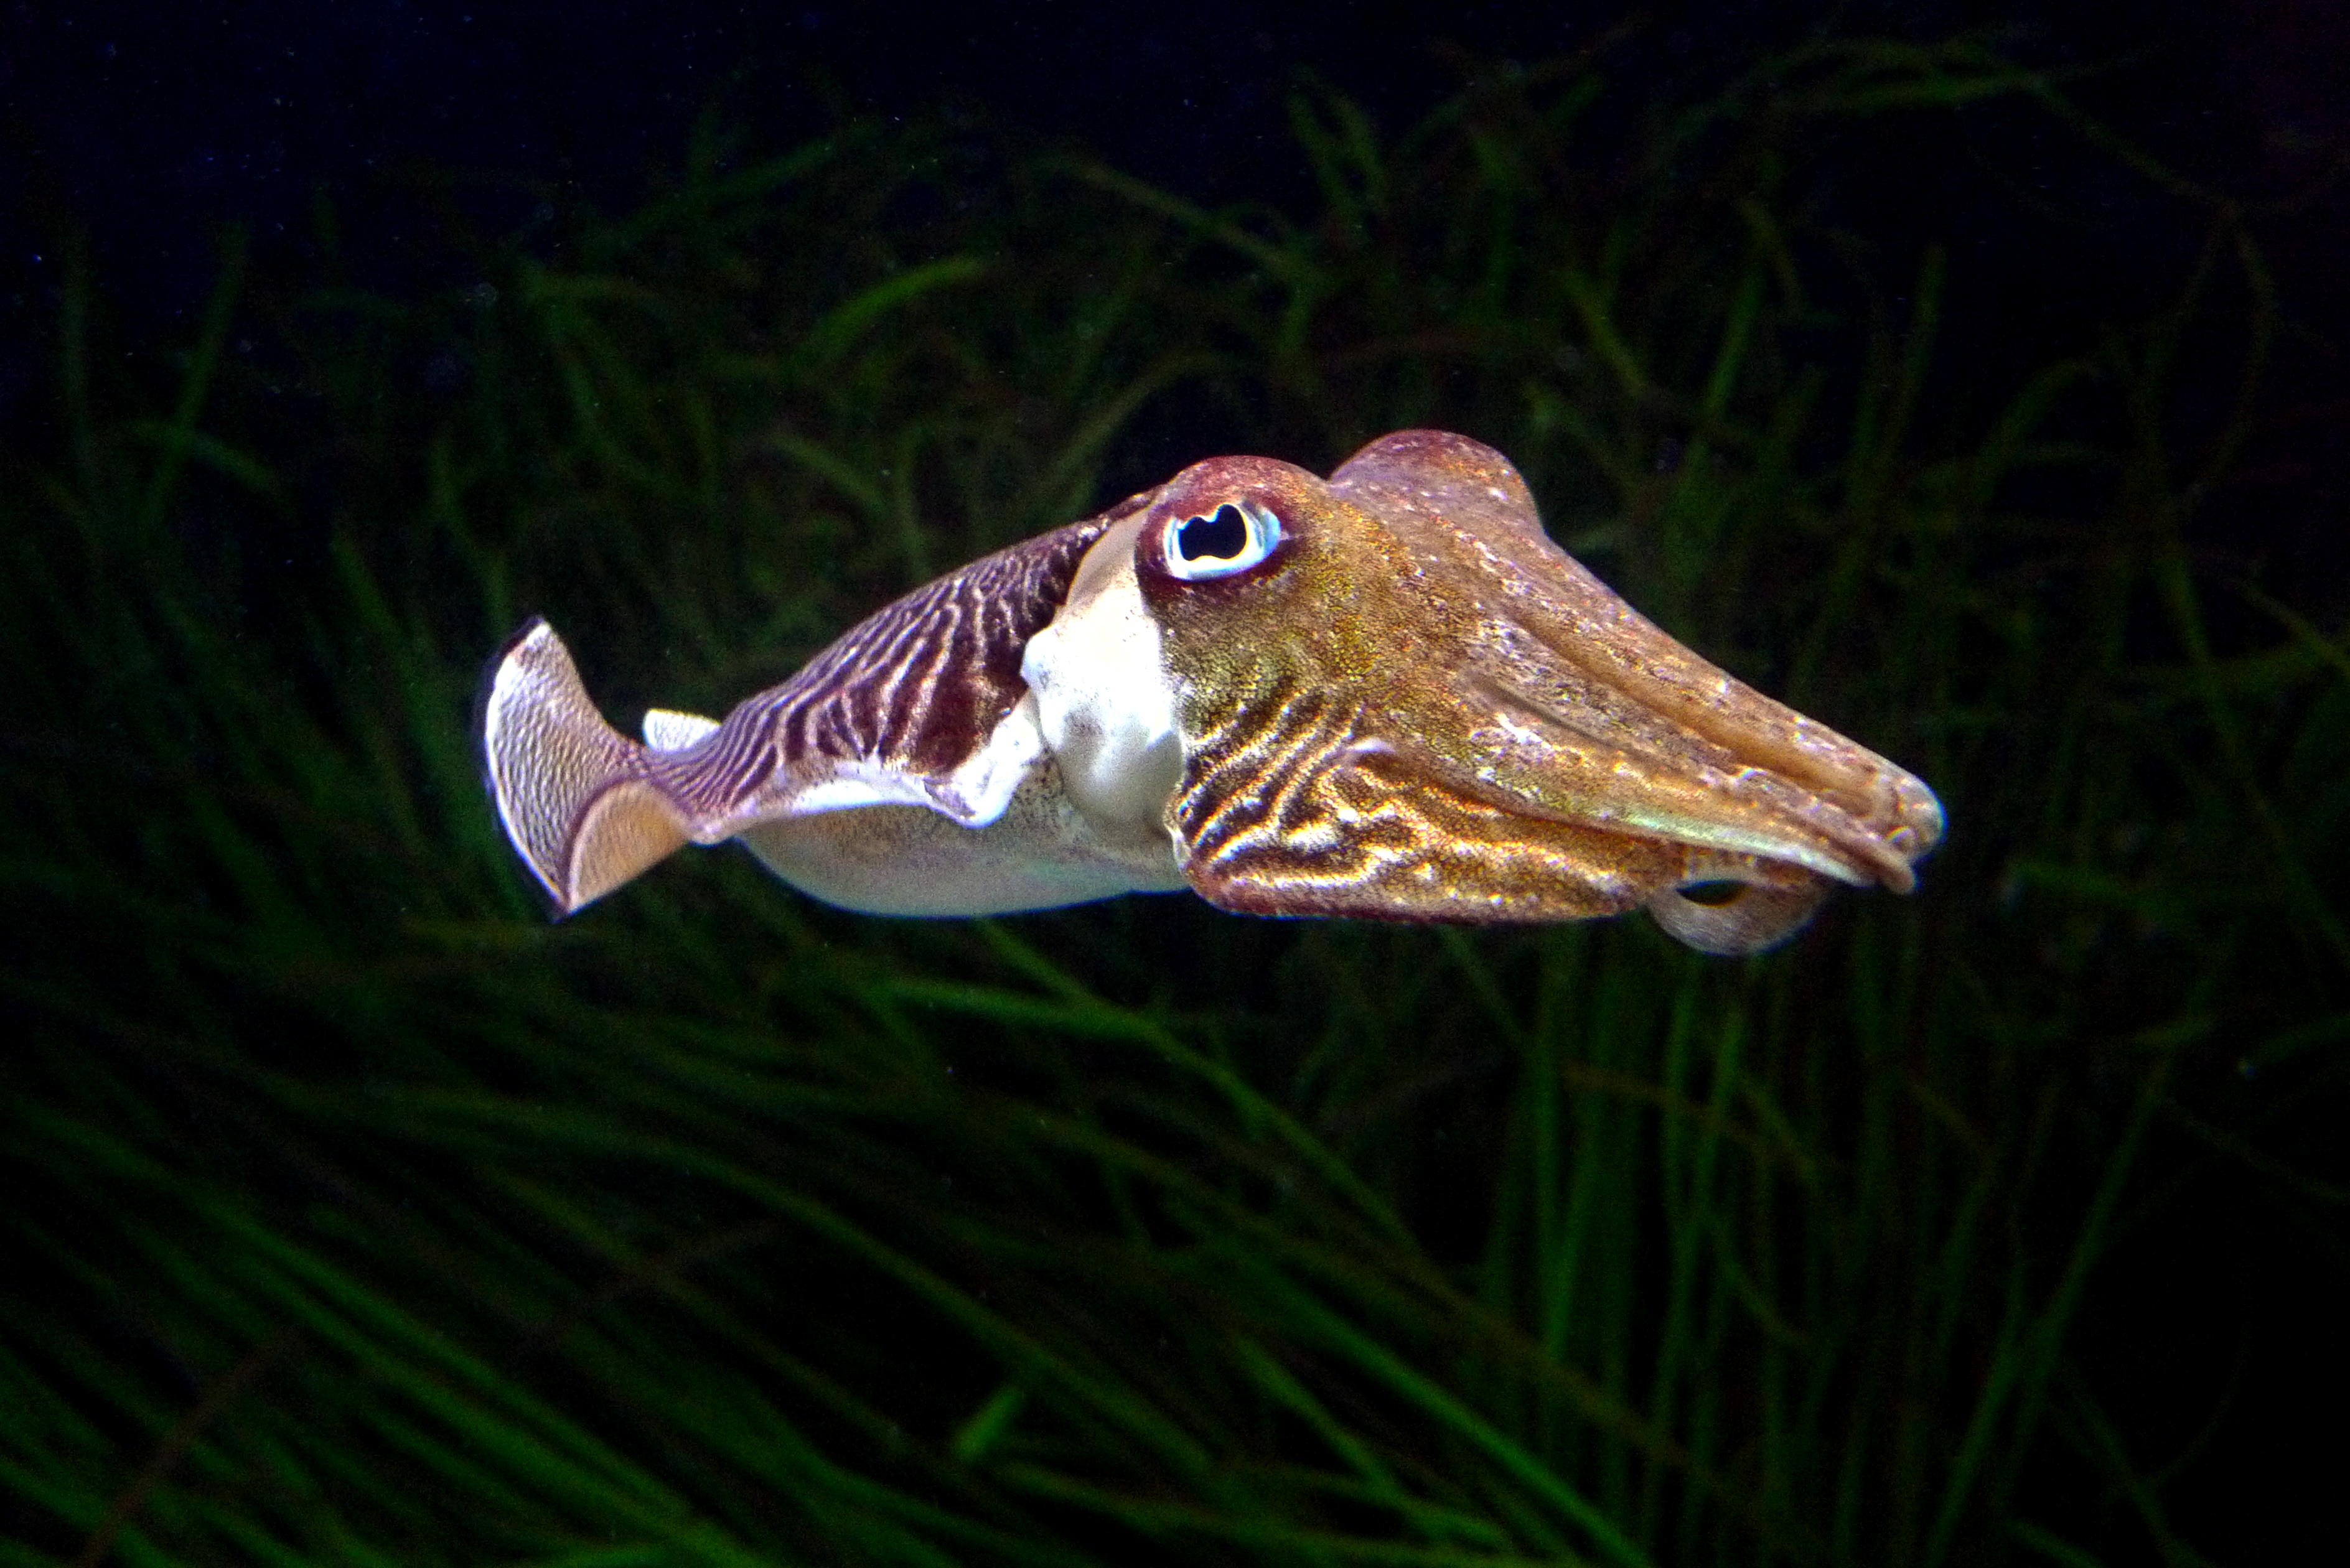 https://upload.wikimedia.org/wikipedia/commons/a/a5/Cuttlefish_@_Ocean%C3%A1rio_de_Lisboa.jpg